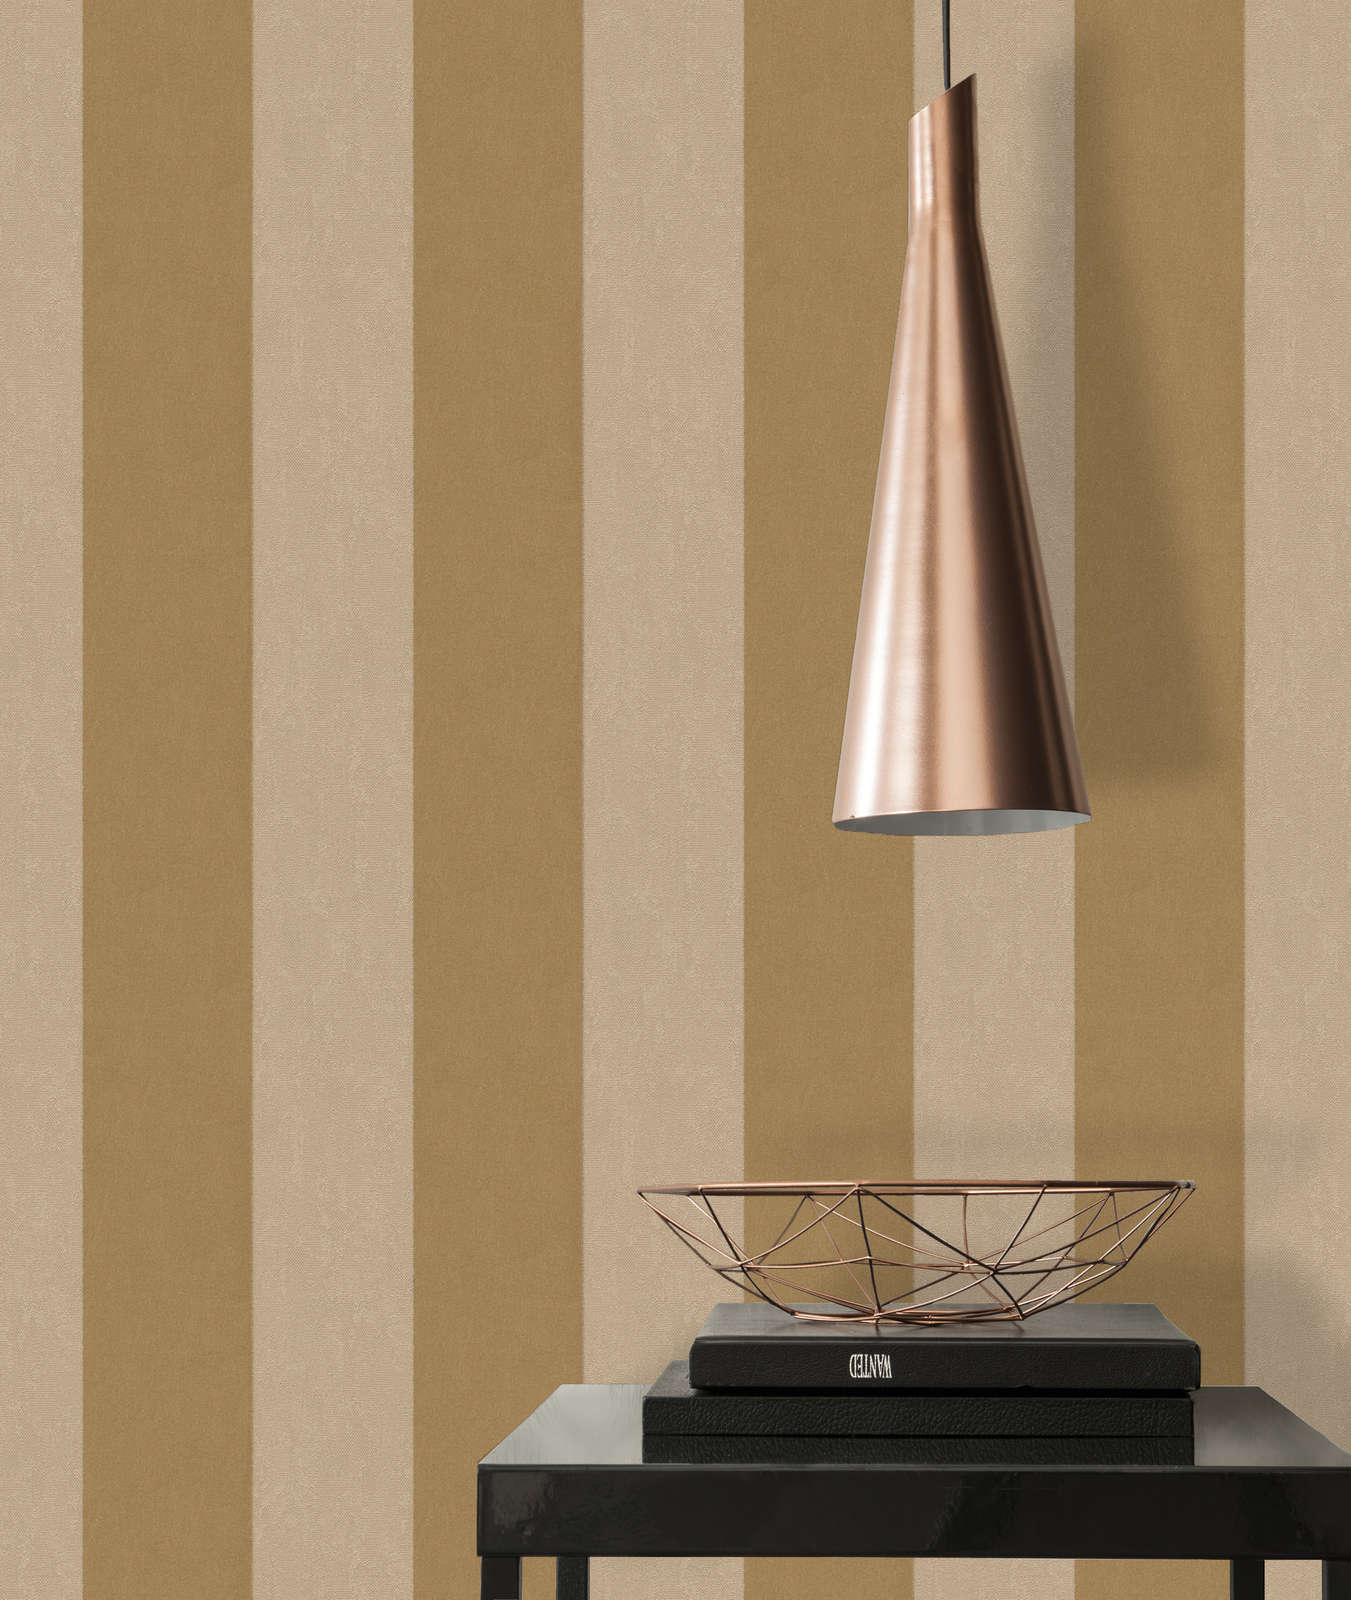             Non-woven wallpaper golden block stripes with textured pattern - metallic
        